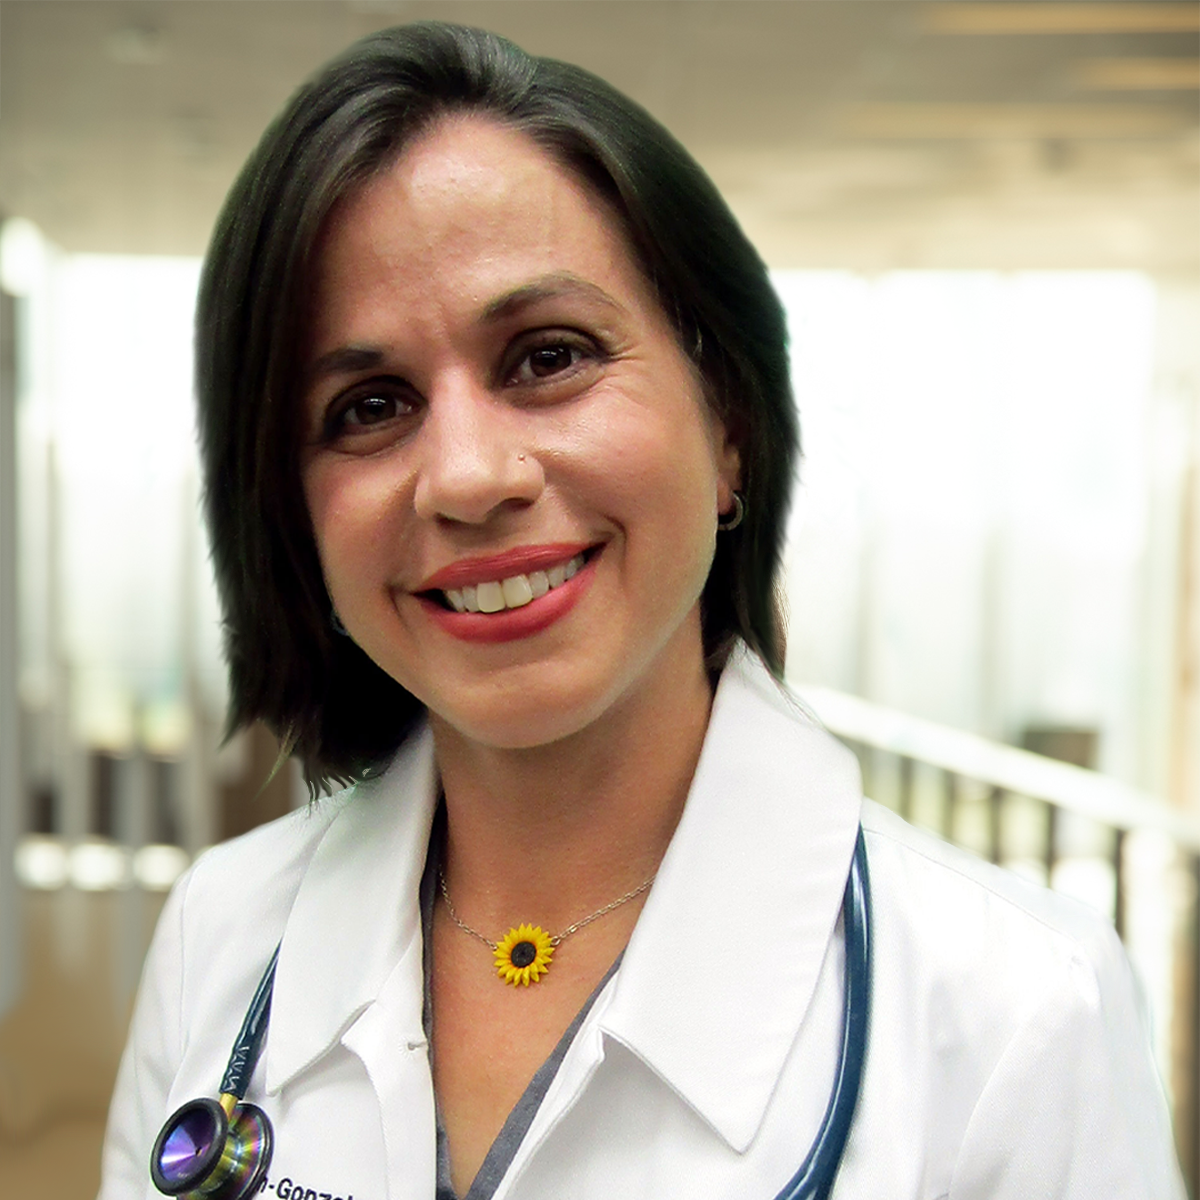 Maria Colon-Gonzalez, M.D., FAAFP